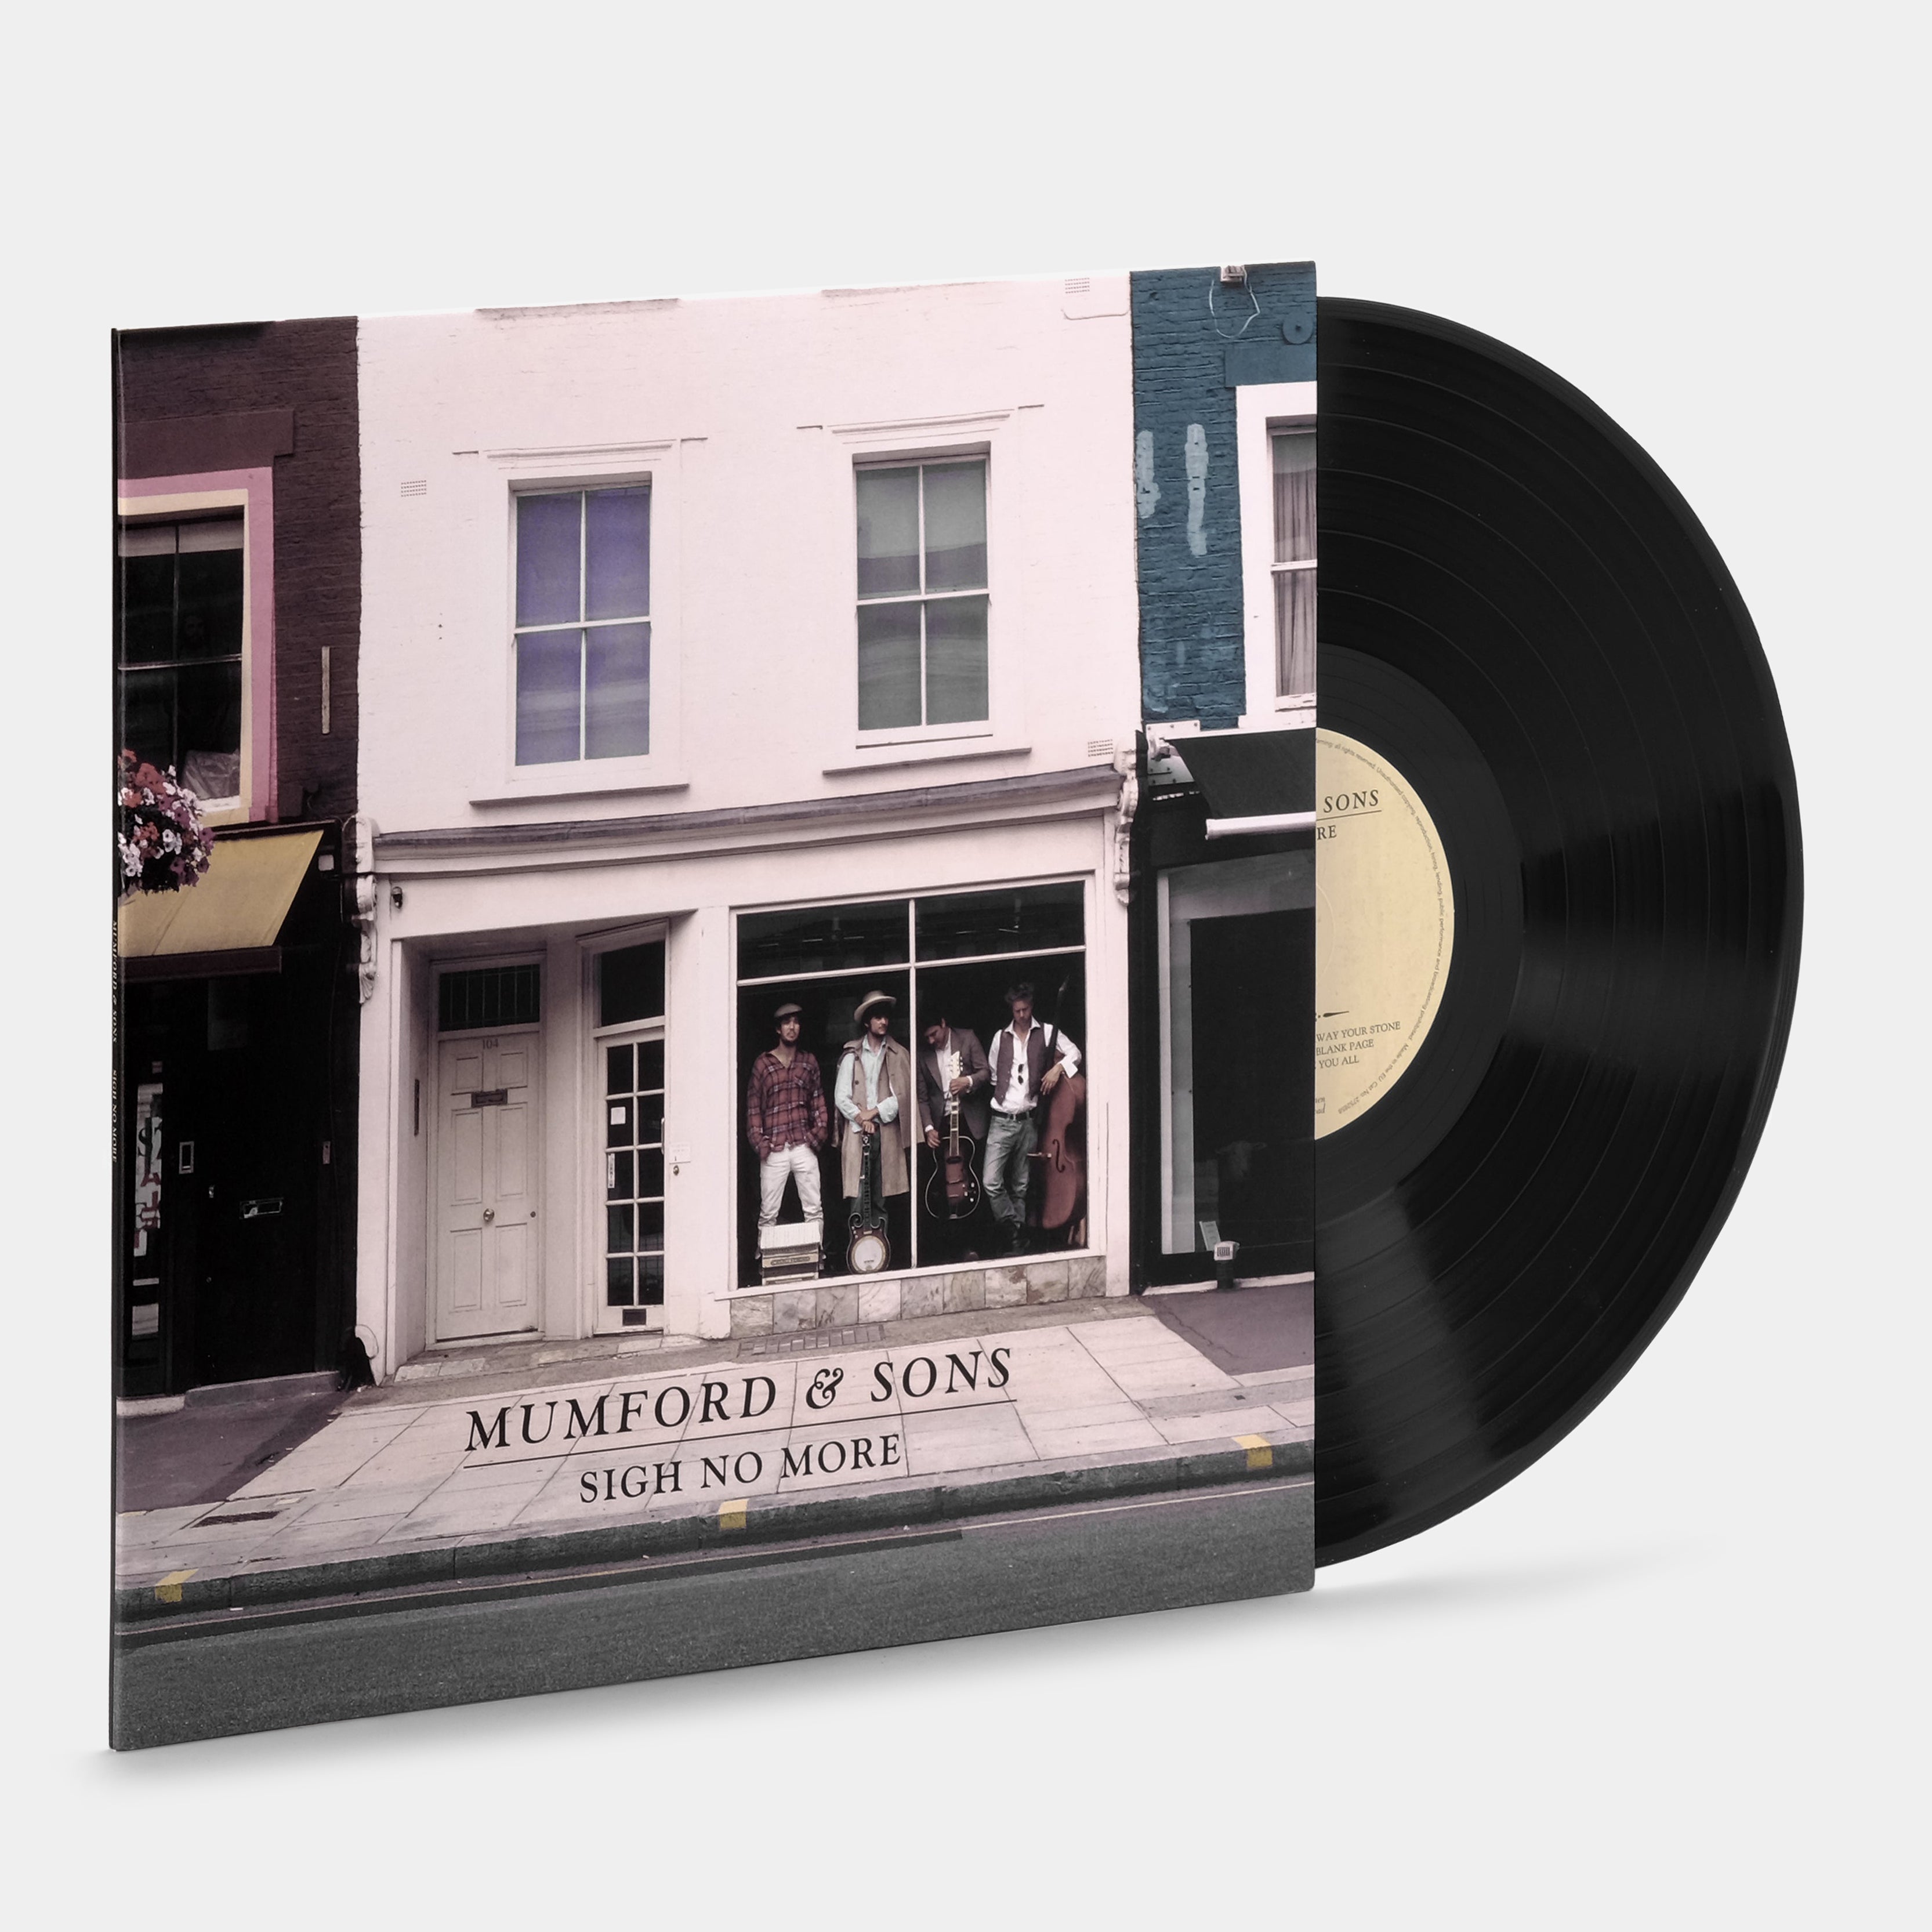 Mumford & Sons - Sigh No More (UK Import Gatefold Sleeve) LP Vinyl Record